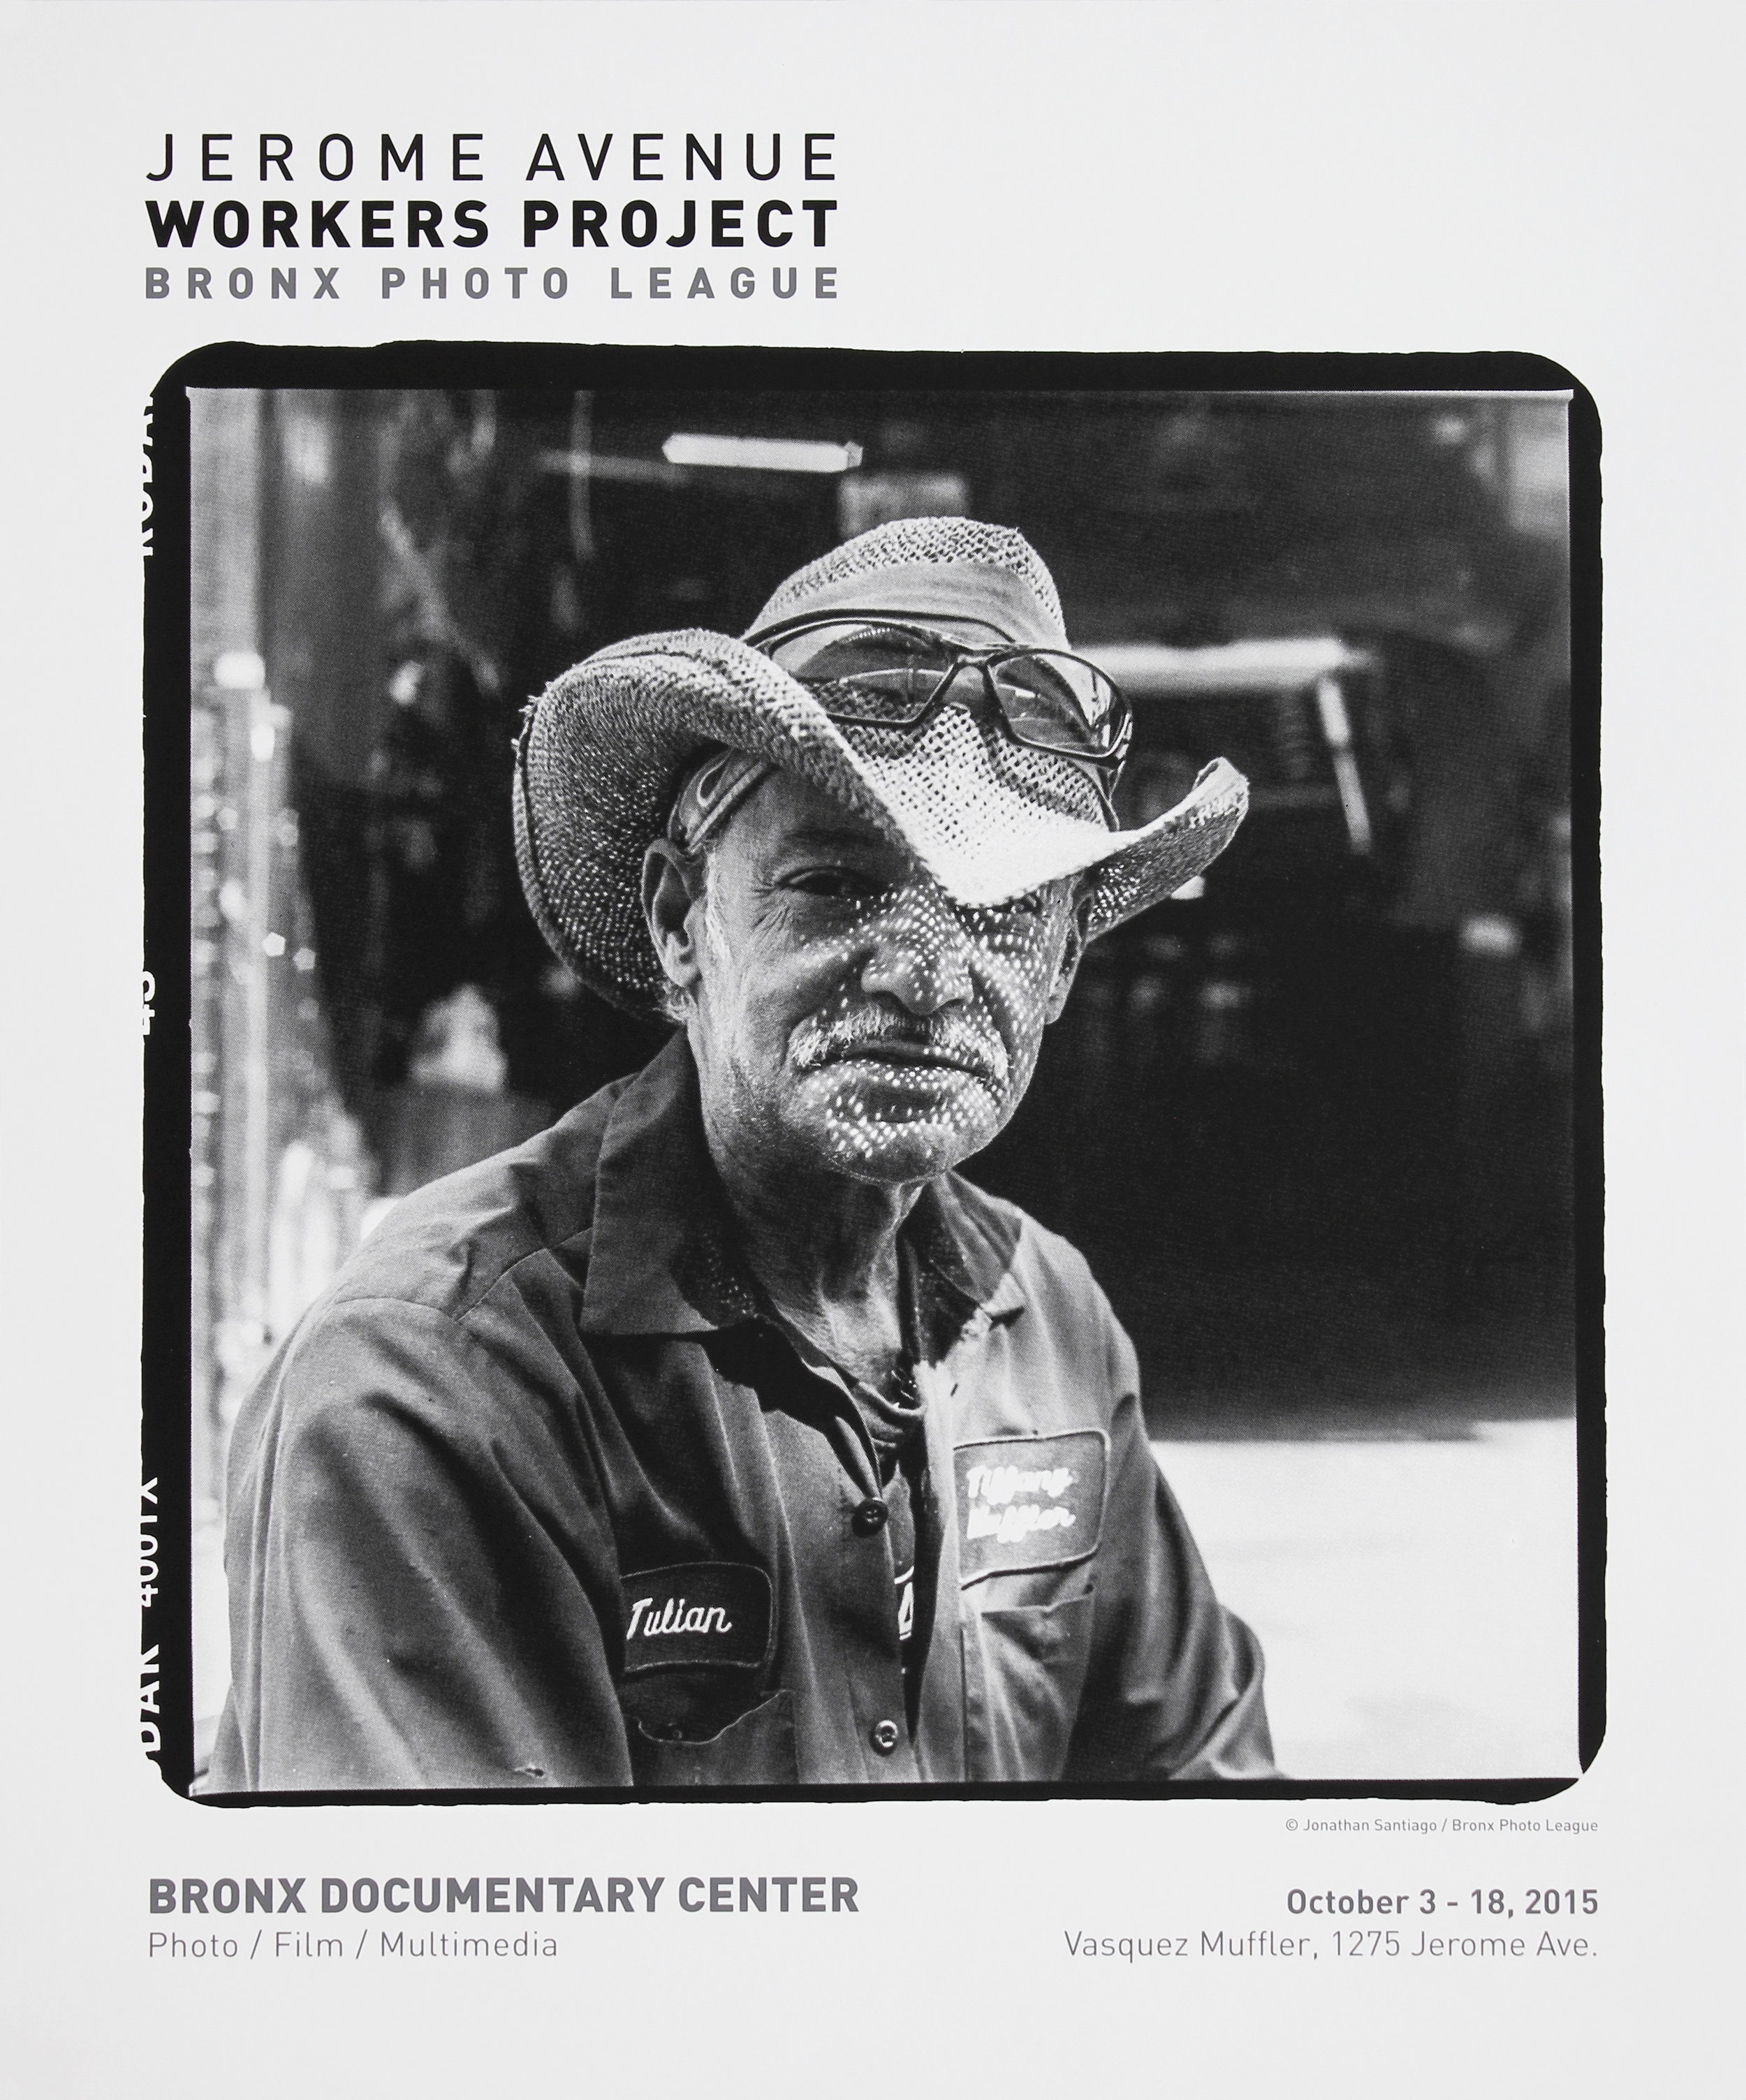 Bronx Doc Center - Bronx Photo League // Jerome Avenue Workers Project